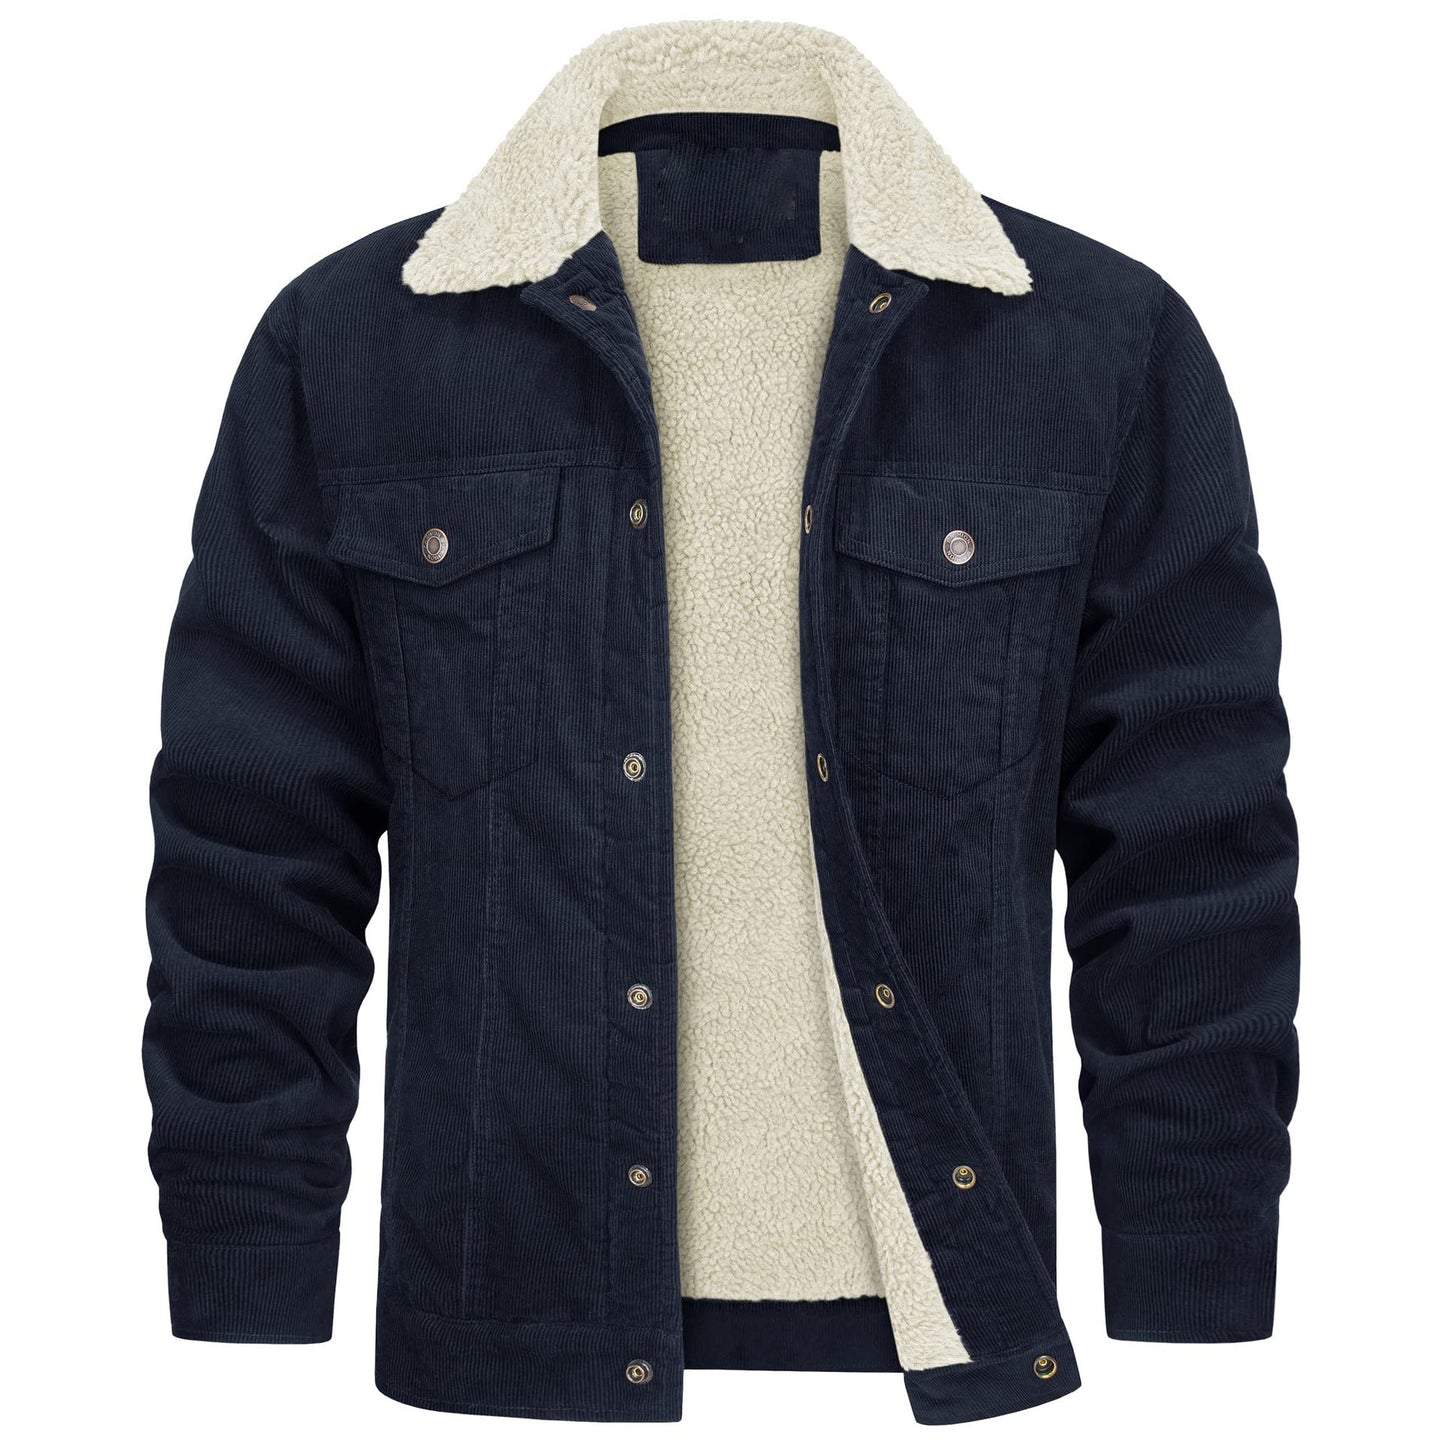 Casual Winter Long Sleeves Velvet Jacket Coats for Men-Coats & Jackets-Navy Blue-S-Free Shipping Leatheretro